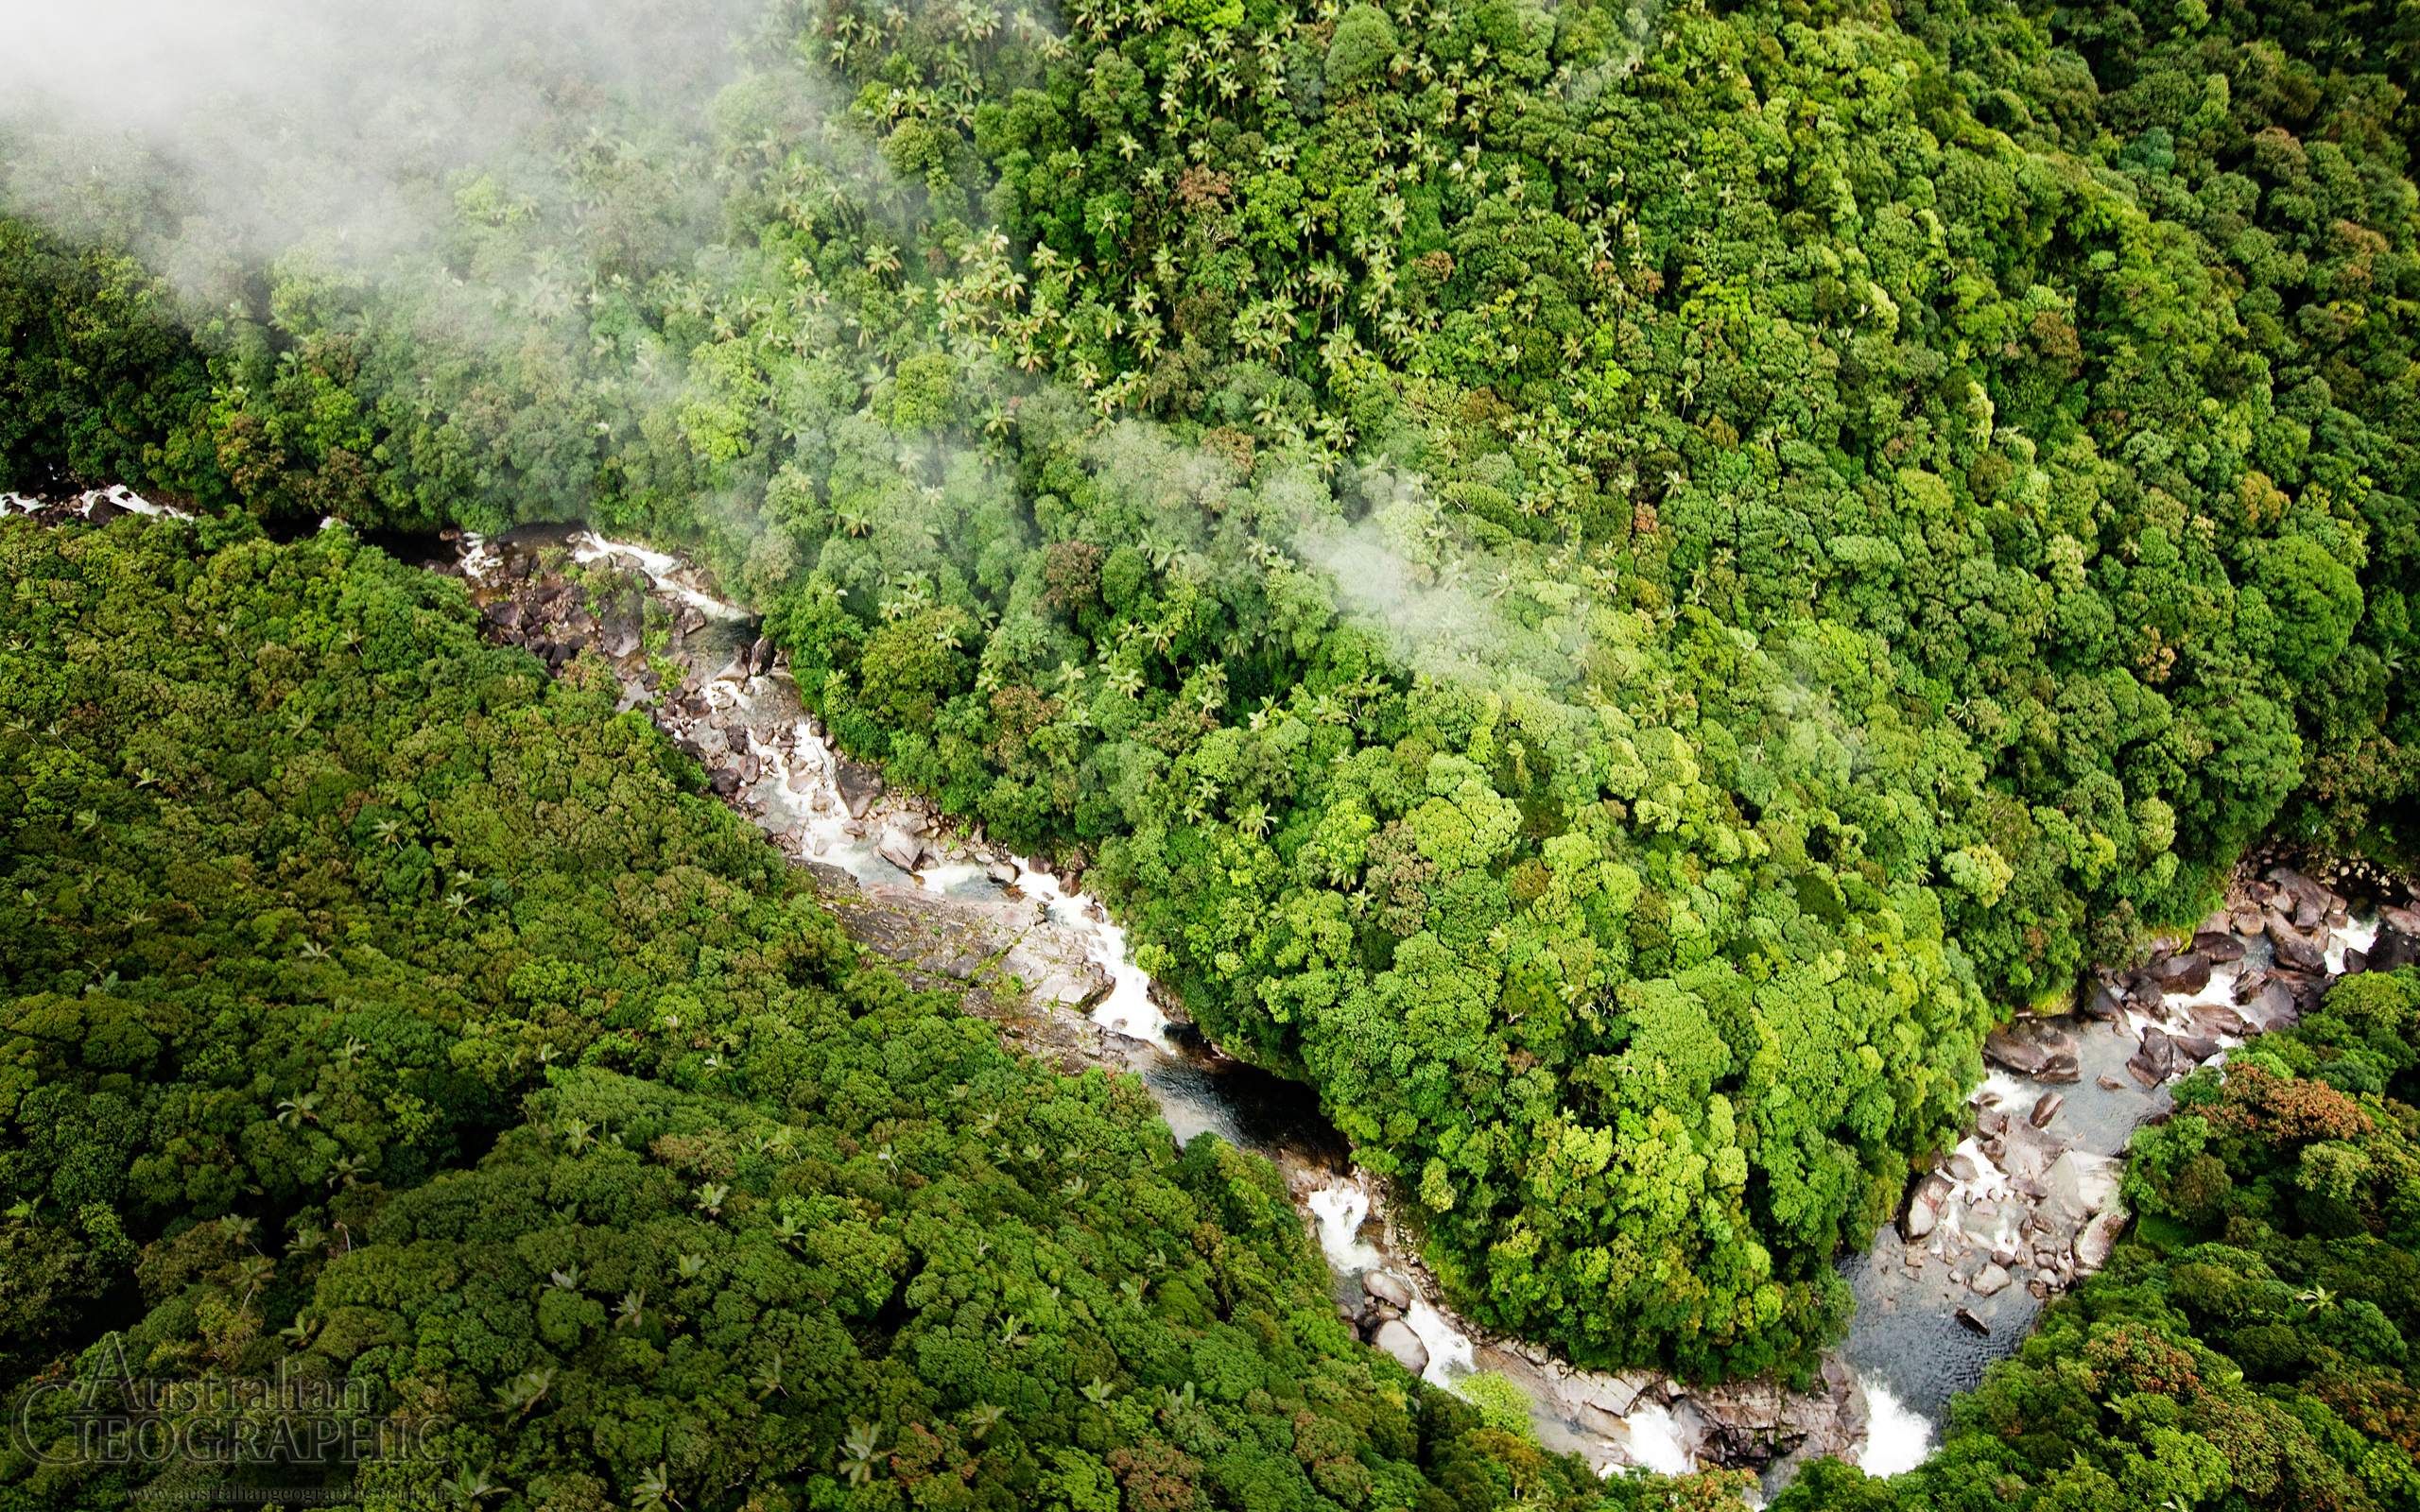 The Daintree River, Lush rainforest, HD wallpapers, Natural beauty, 2560x1600 HD Desktop